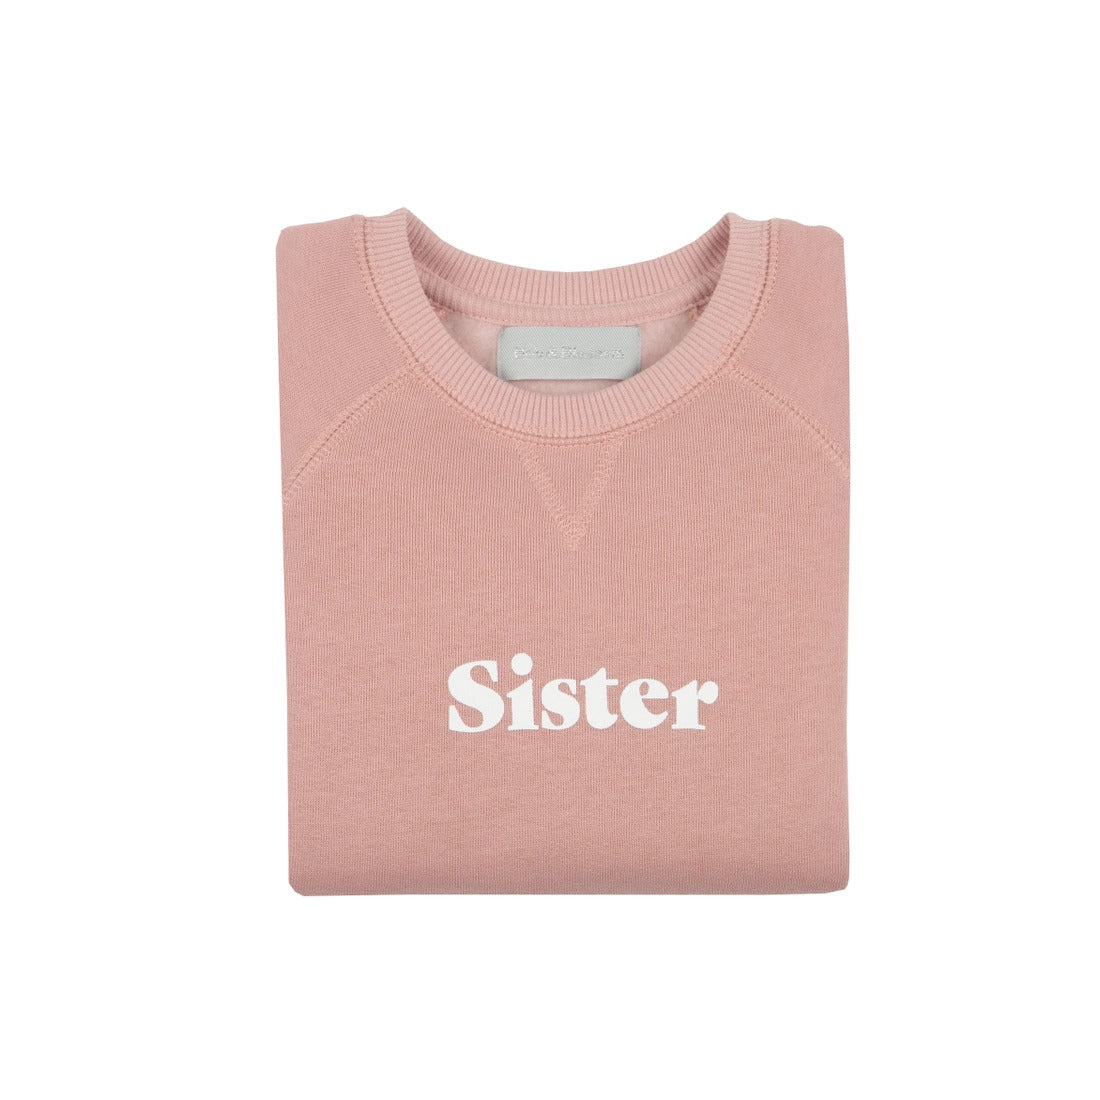 Sister Sweatshirt | Faded Blush